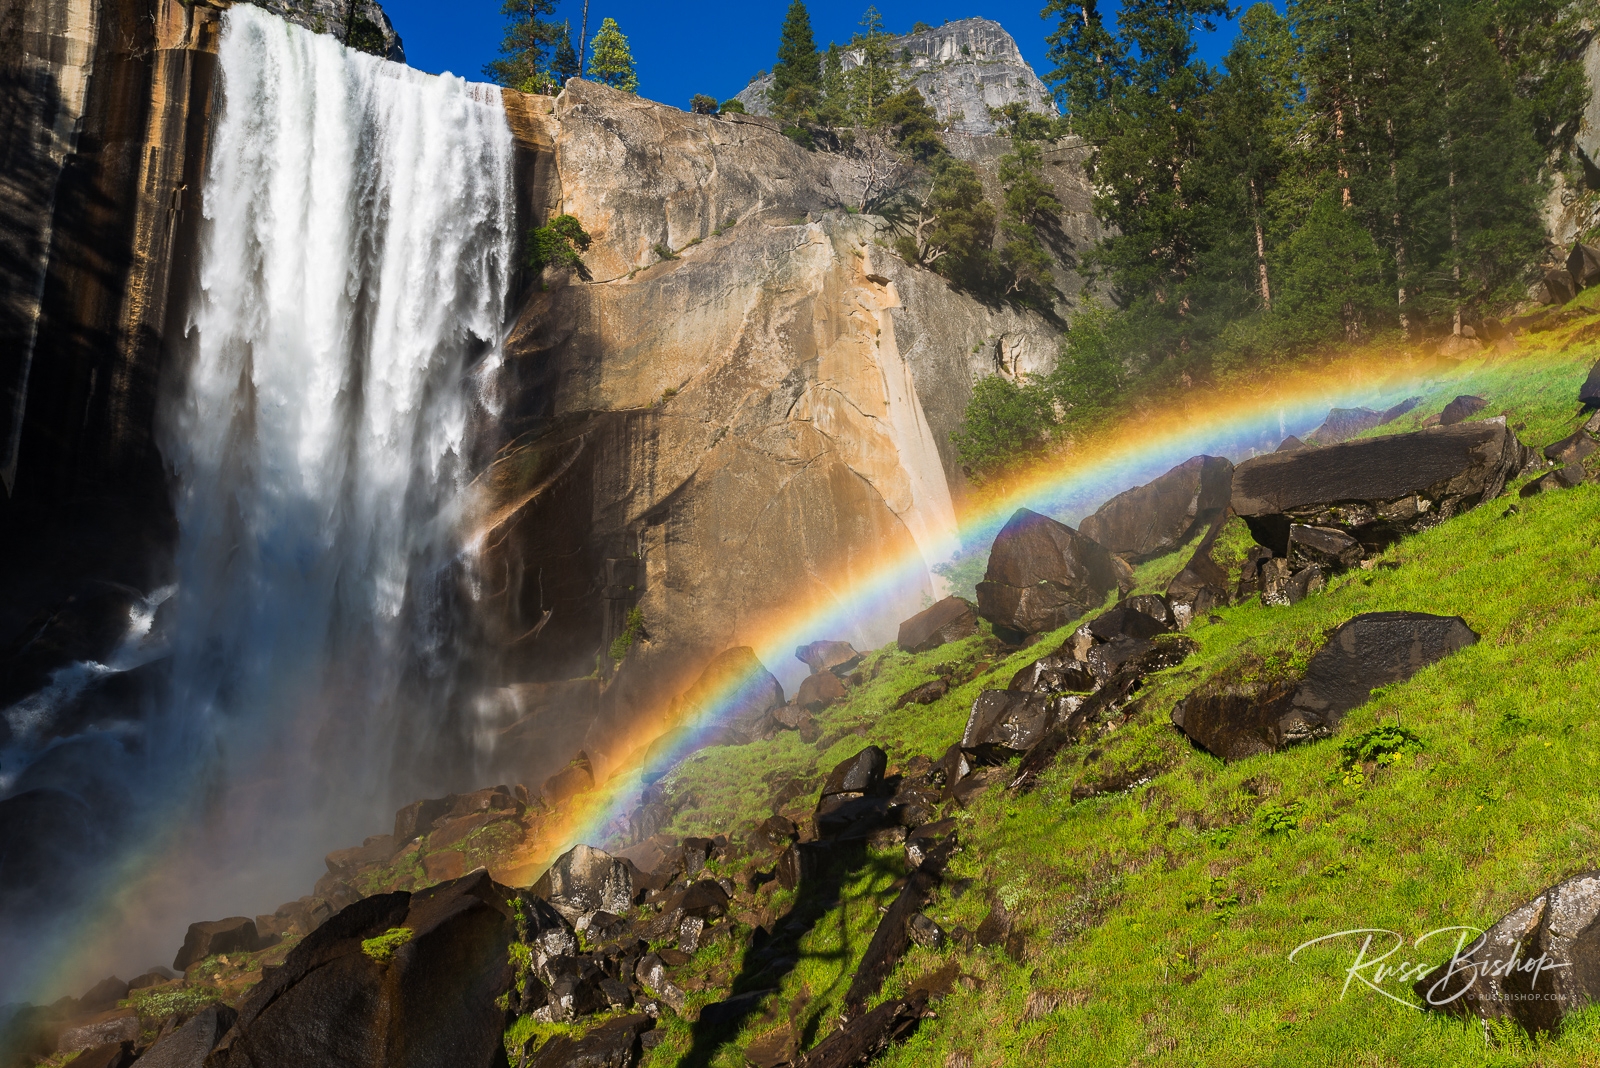 Vernal Fall and rainbow on the Mist Trail, Yosemite National Park, California